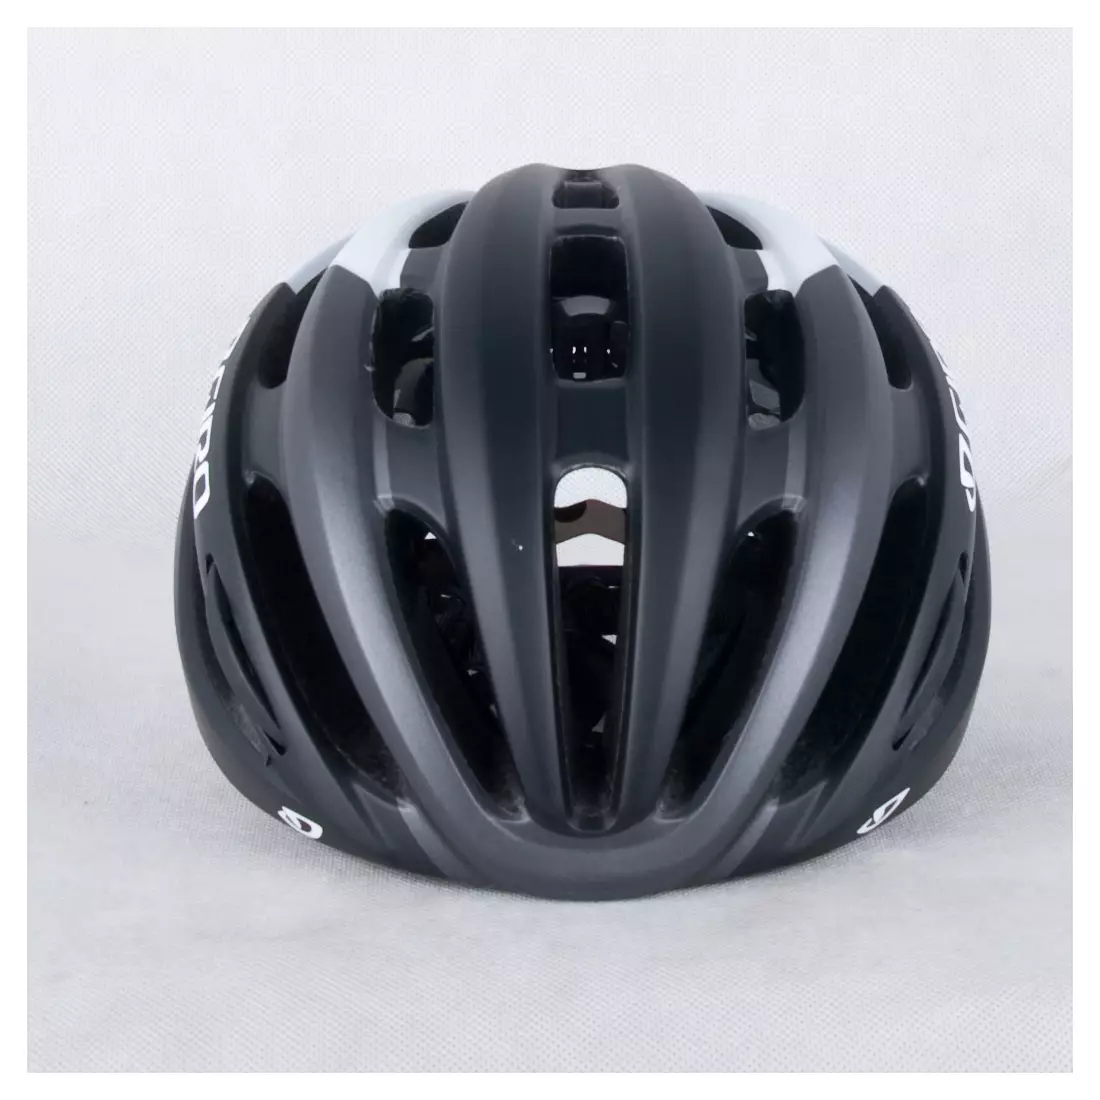 GIRO FORAY MIPS - black and white matte bicycle helmet